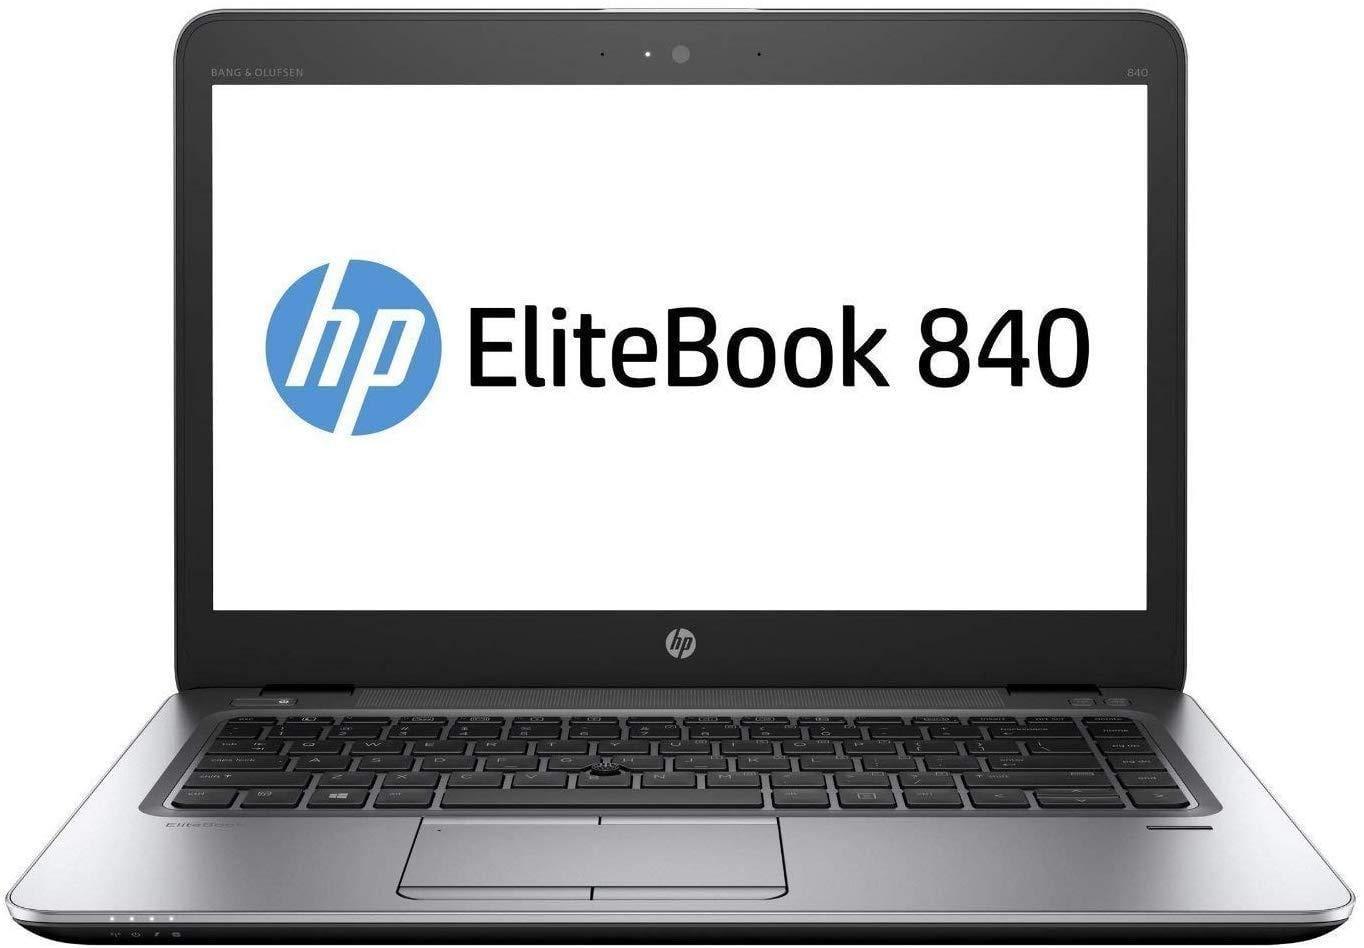 HP Elitebook 840 G3 Core i5 6th Gen 8GB RAM 256GB SSD Windows 10 Original - Refurbished, A+ Grade Business Class Laptop-Computers and Laptops-dealsplant